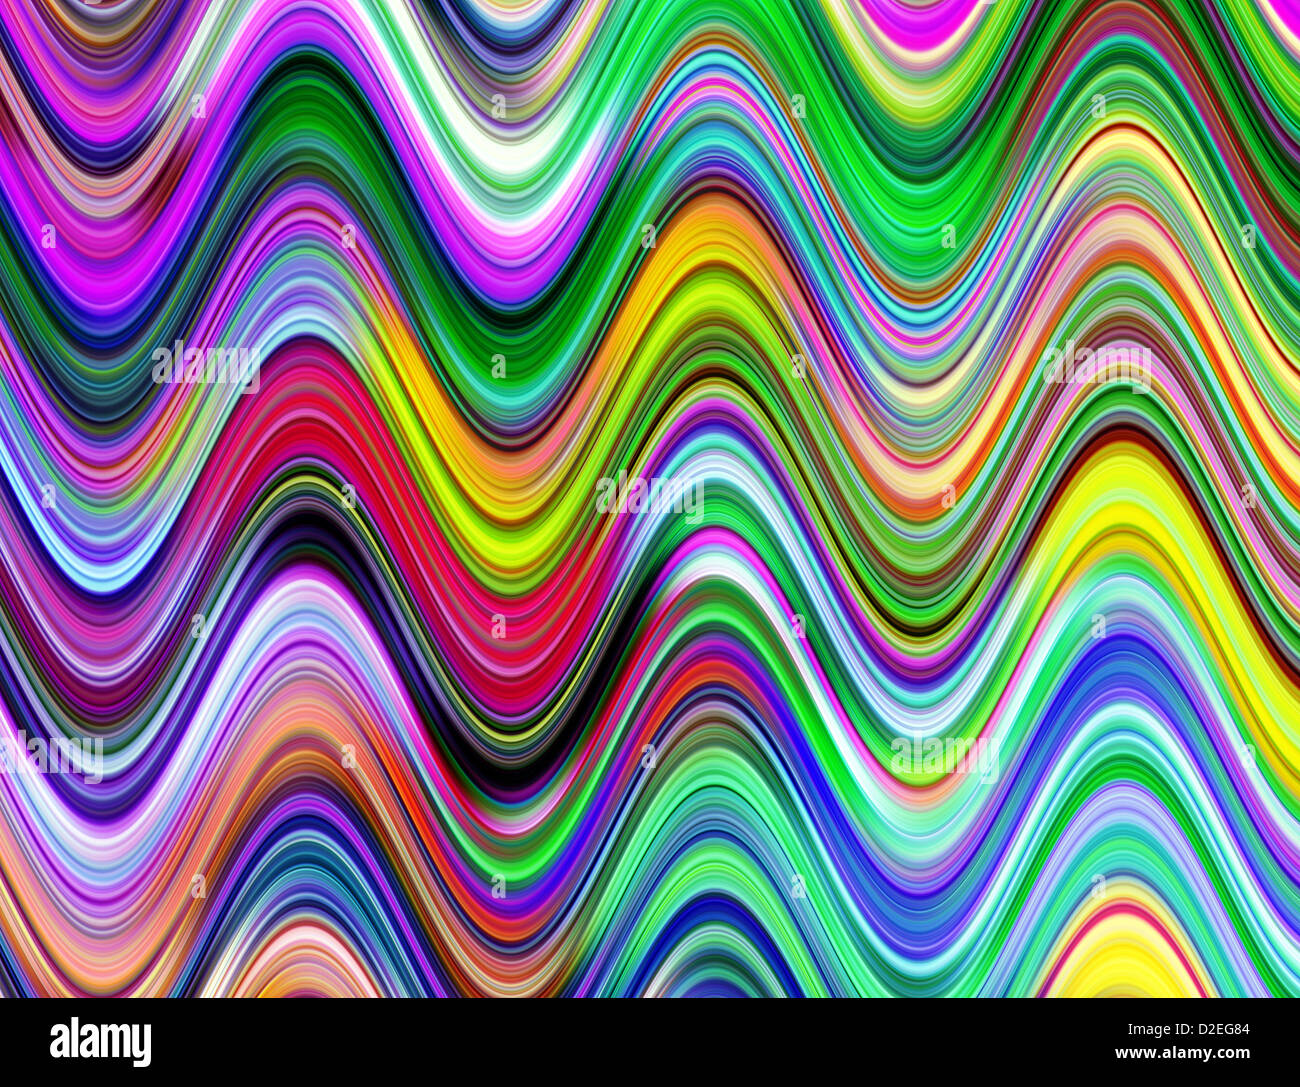 Vibrant multicoloured waves illustration. Stock Photo